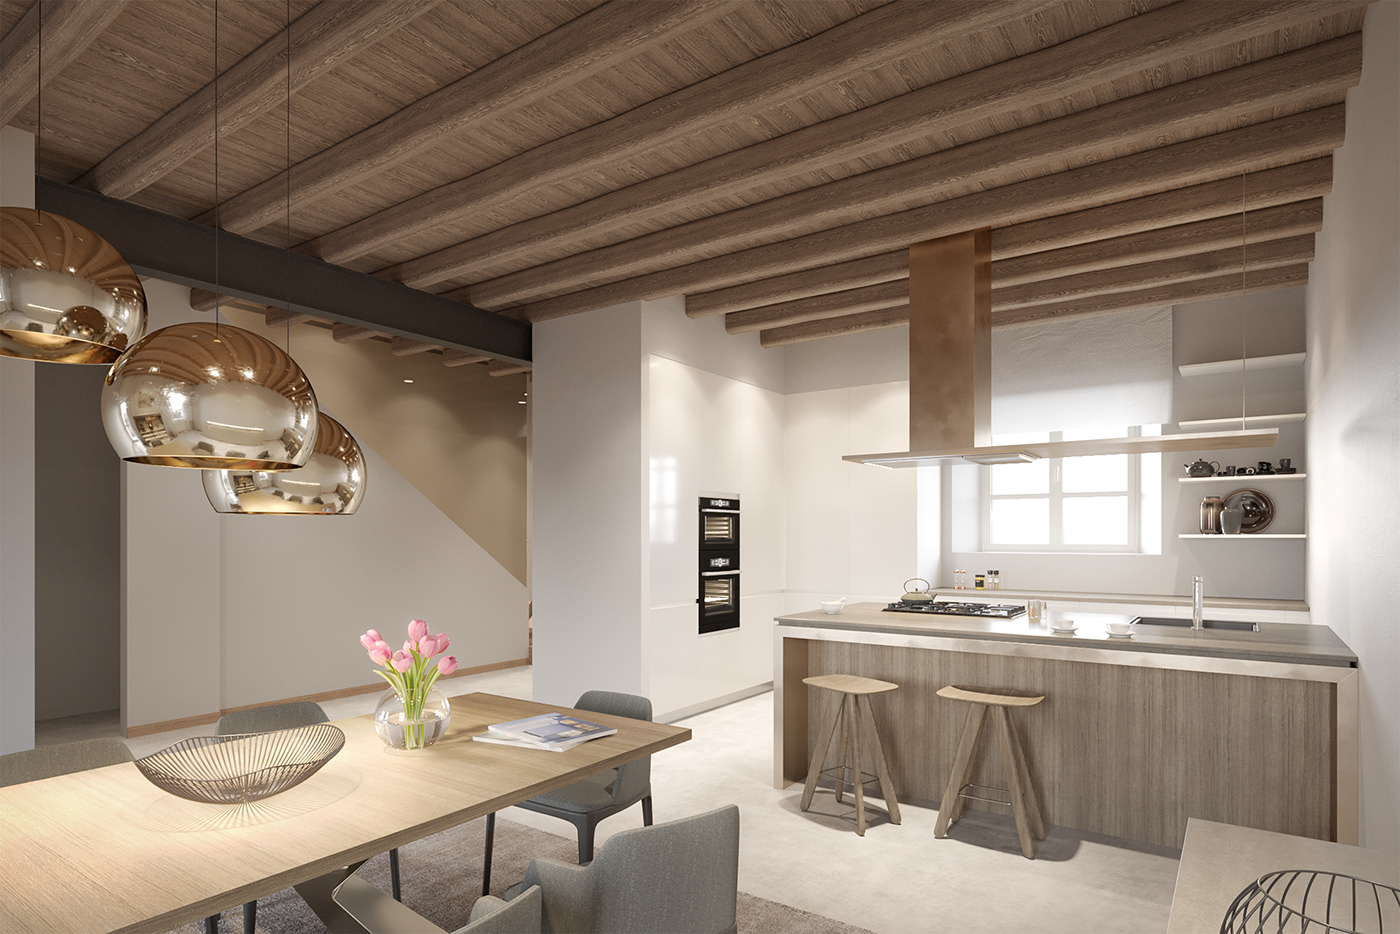 architecture archviz interior design  Render visualization 3D Immobiliare Italy real estate udine